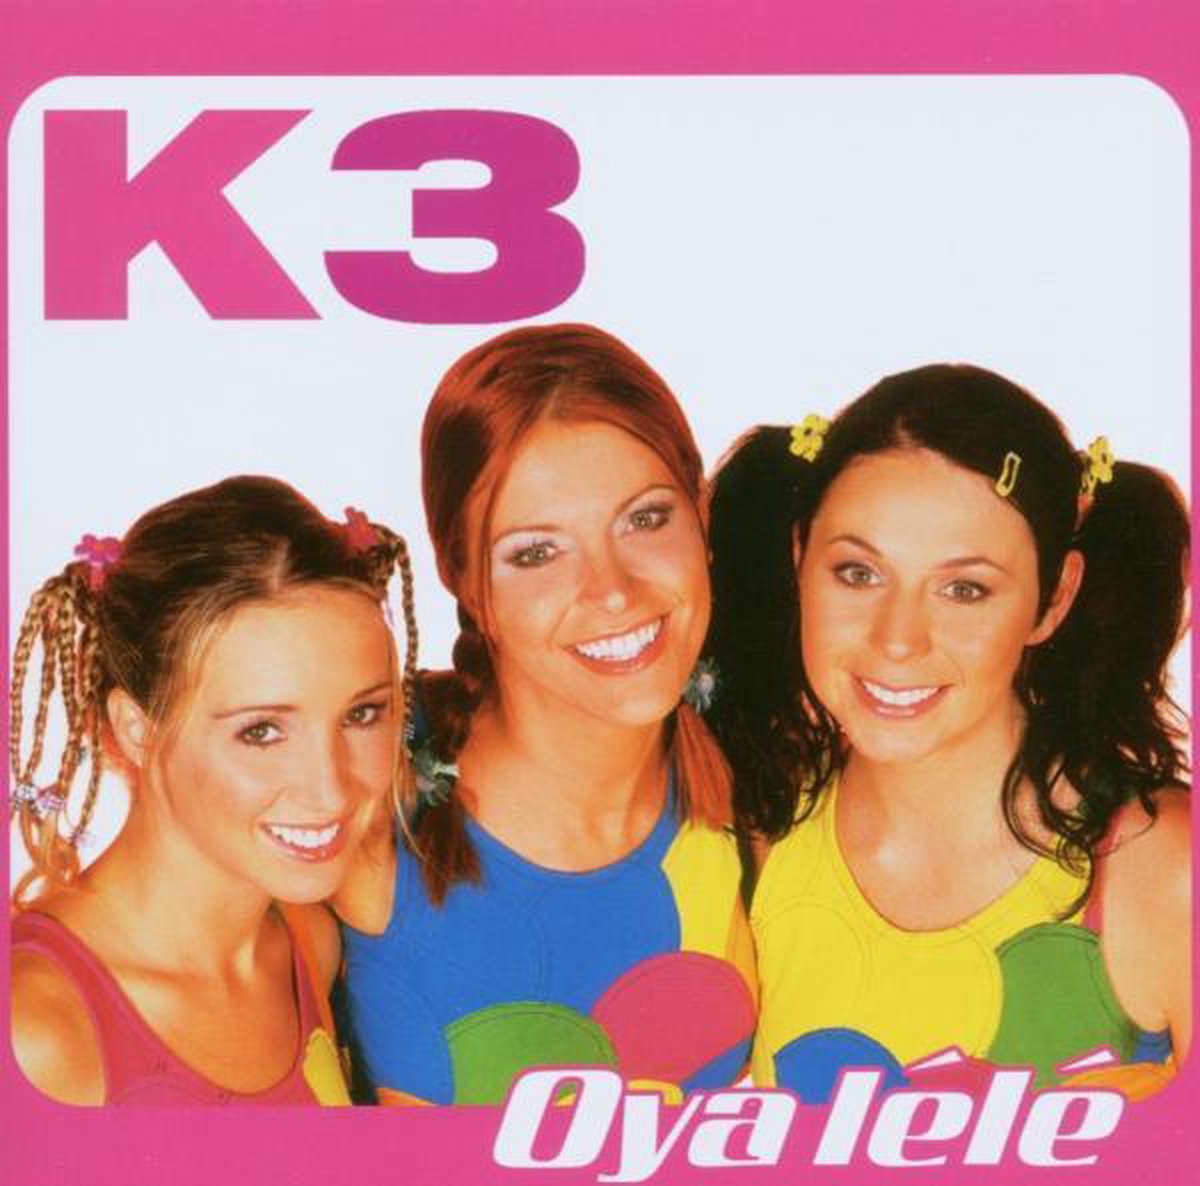 Oya lele (CD) K3, K3 | CD (album) | Muziek | bol.com